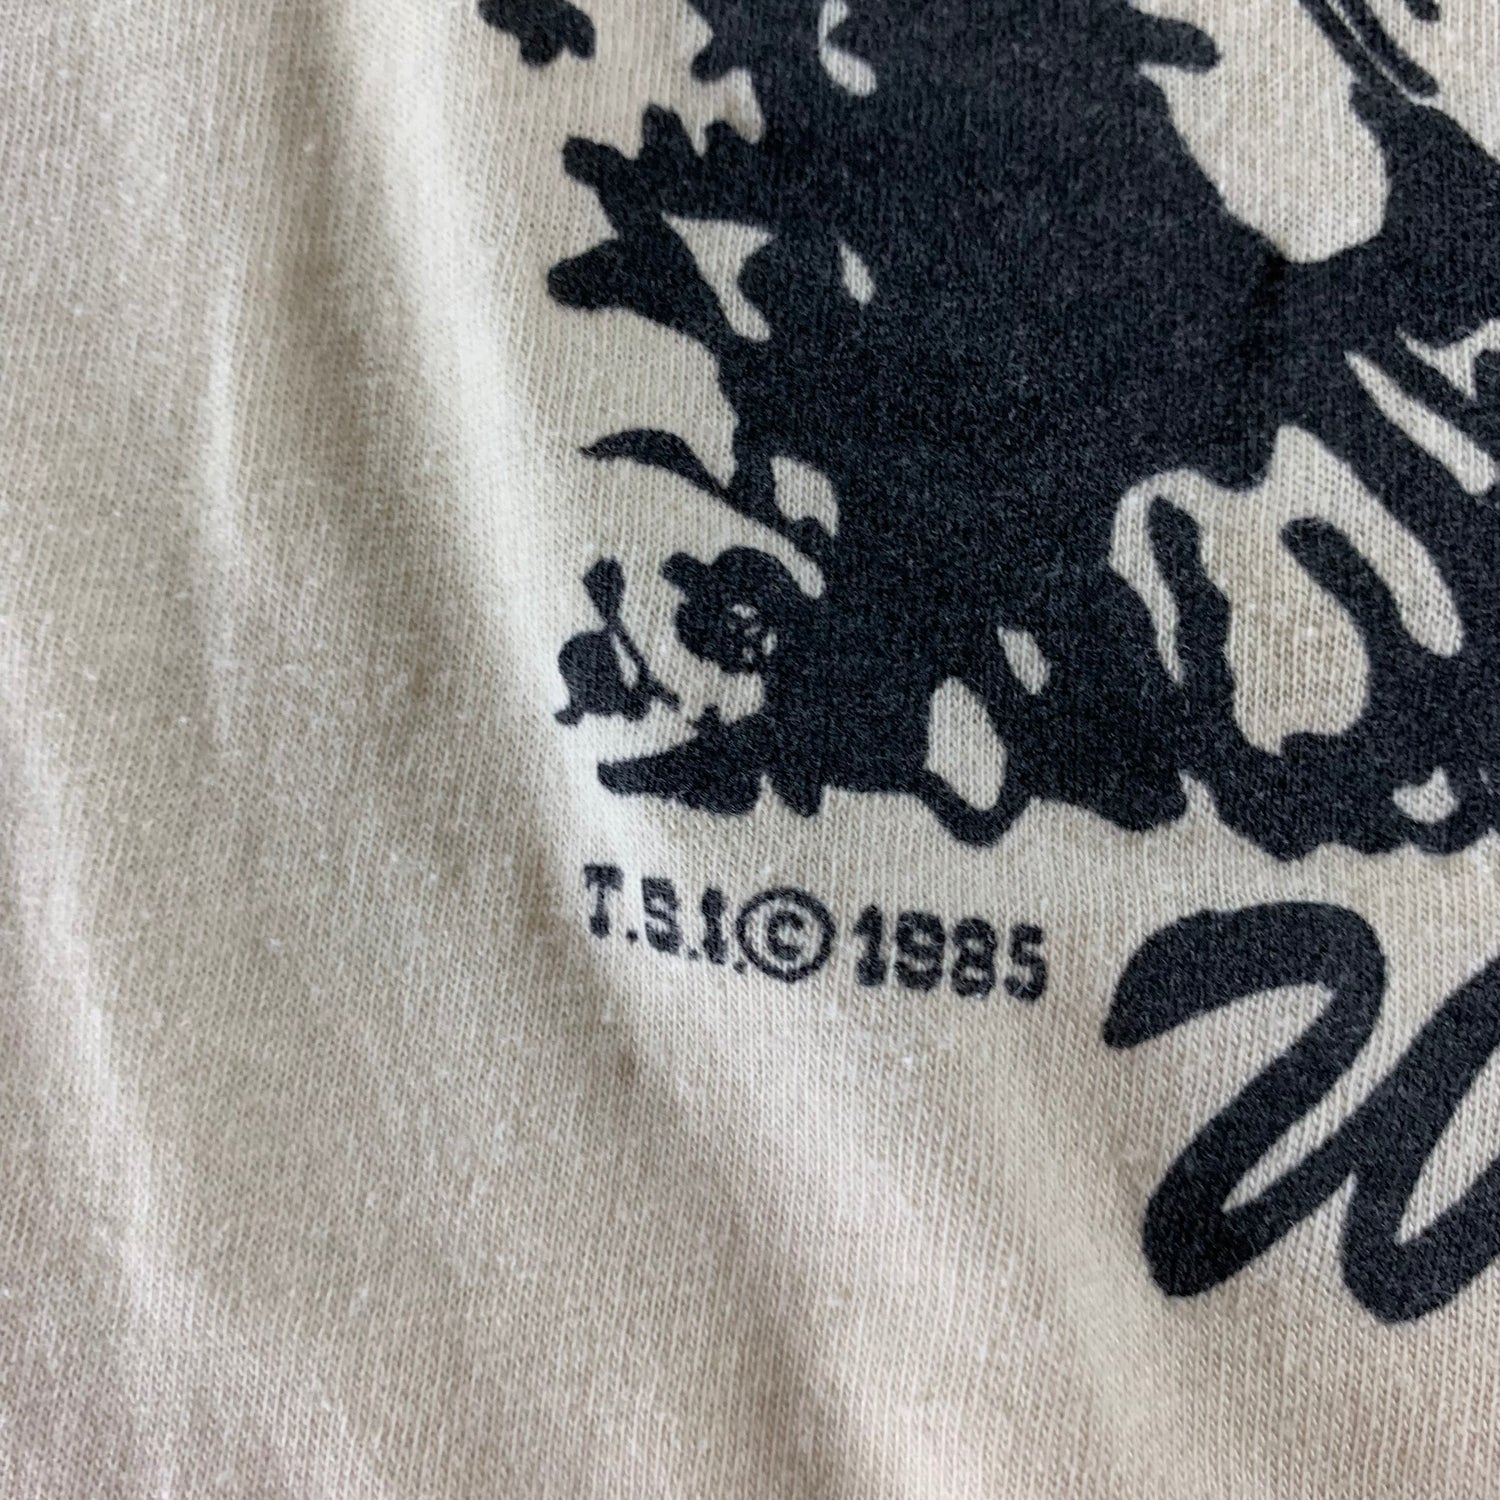 Vintage 1985 West Virginia T-shirt size XL